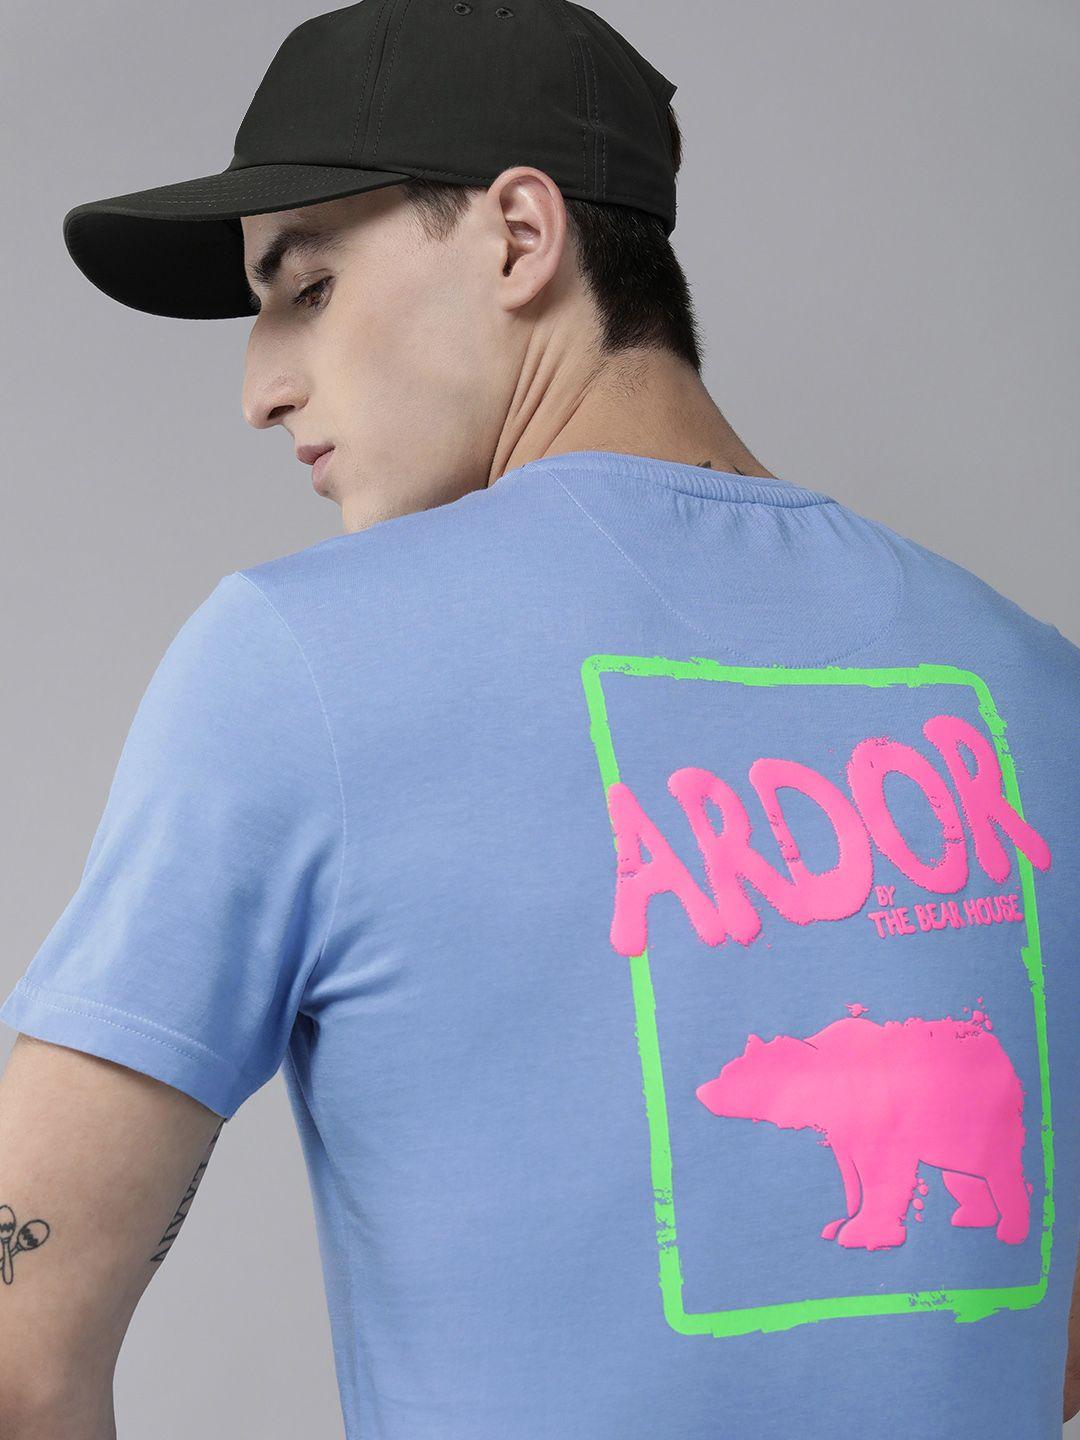 the-bear-house-ardor-edition-men-blue-pure-cotton-brand-logo-printed-slim-fit-t-shirt